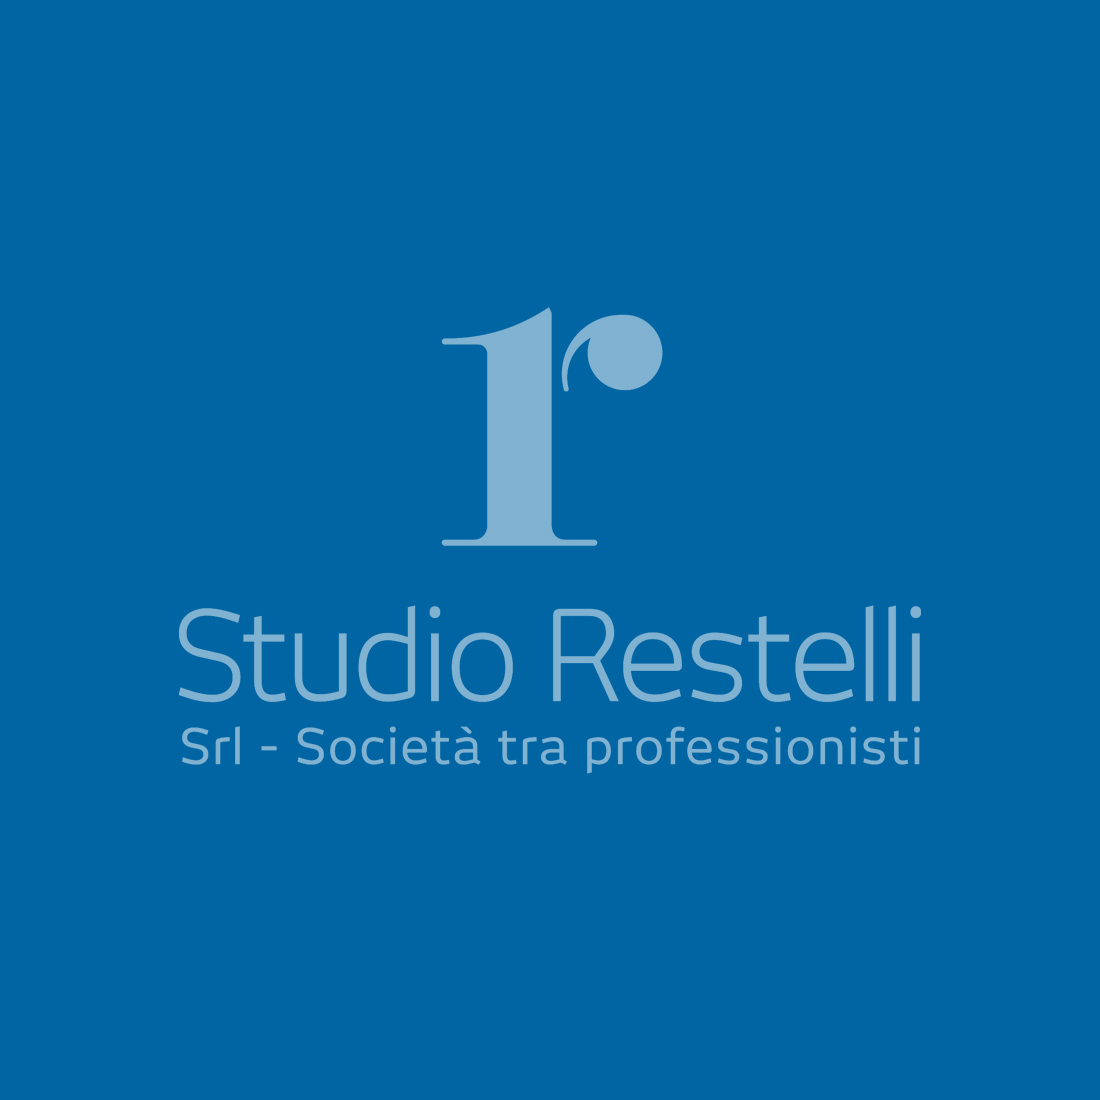 Corporate Identity Studio Restelli